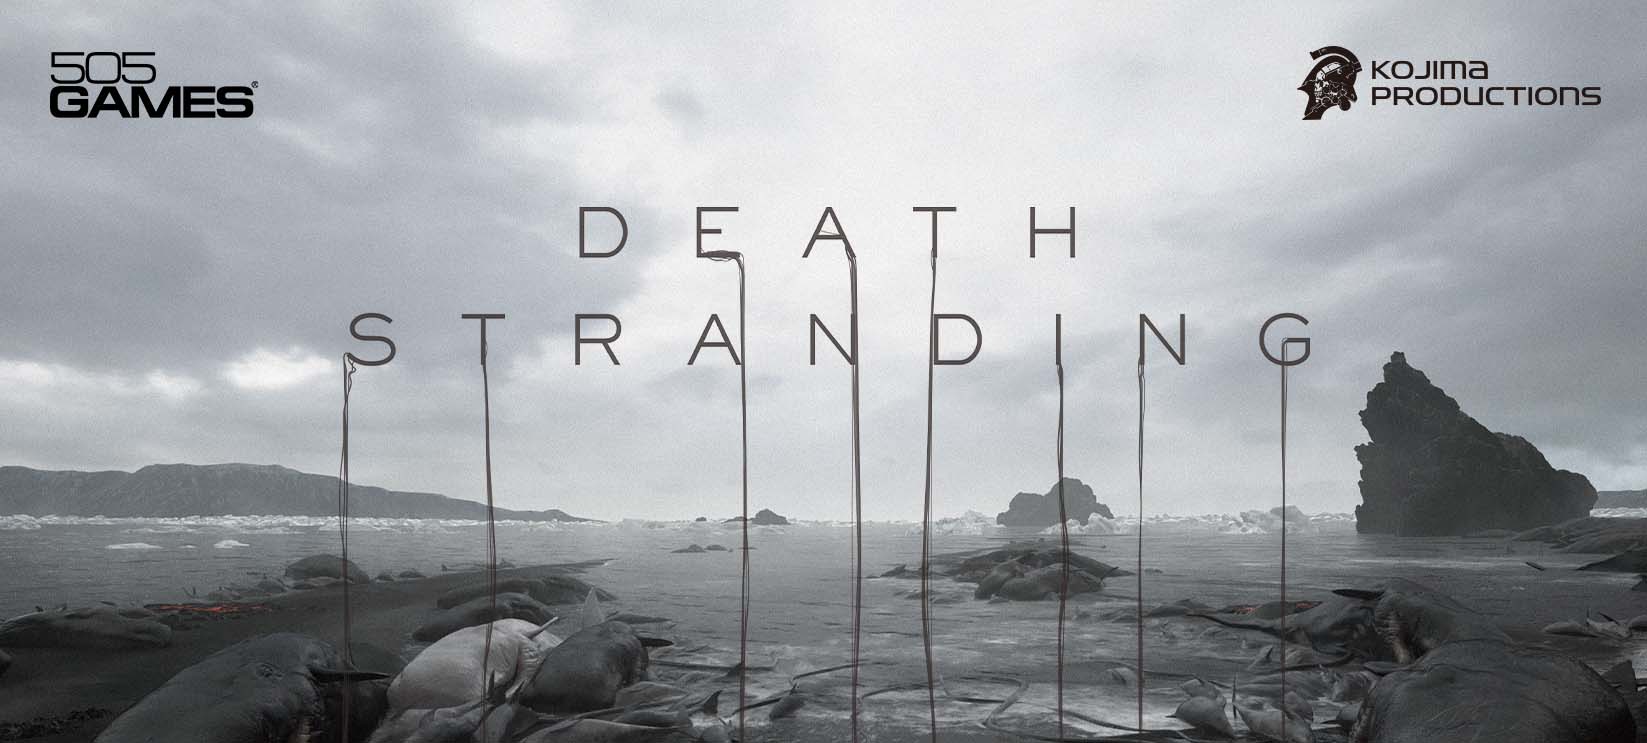 DEATH STRANDING/デス・ストランディング